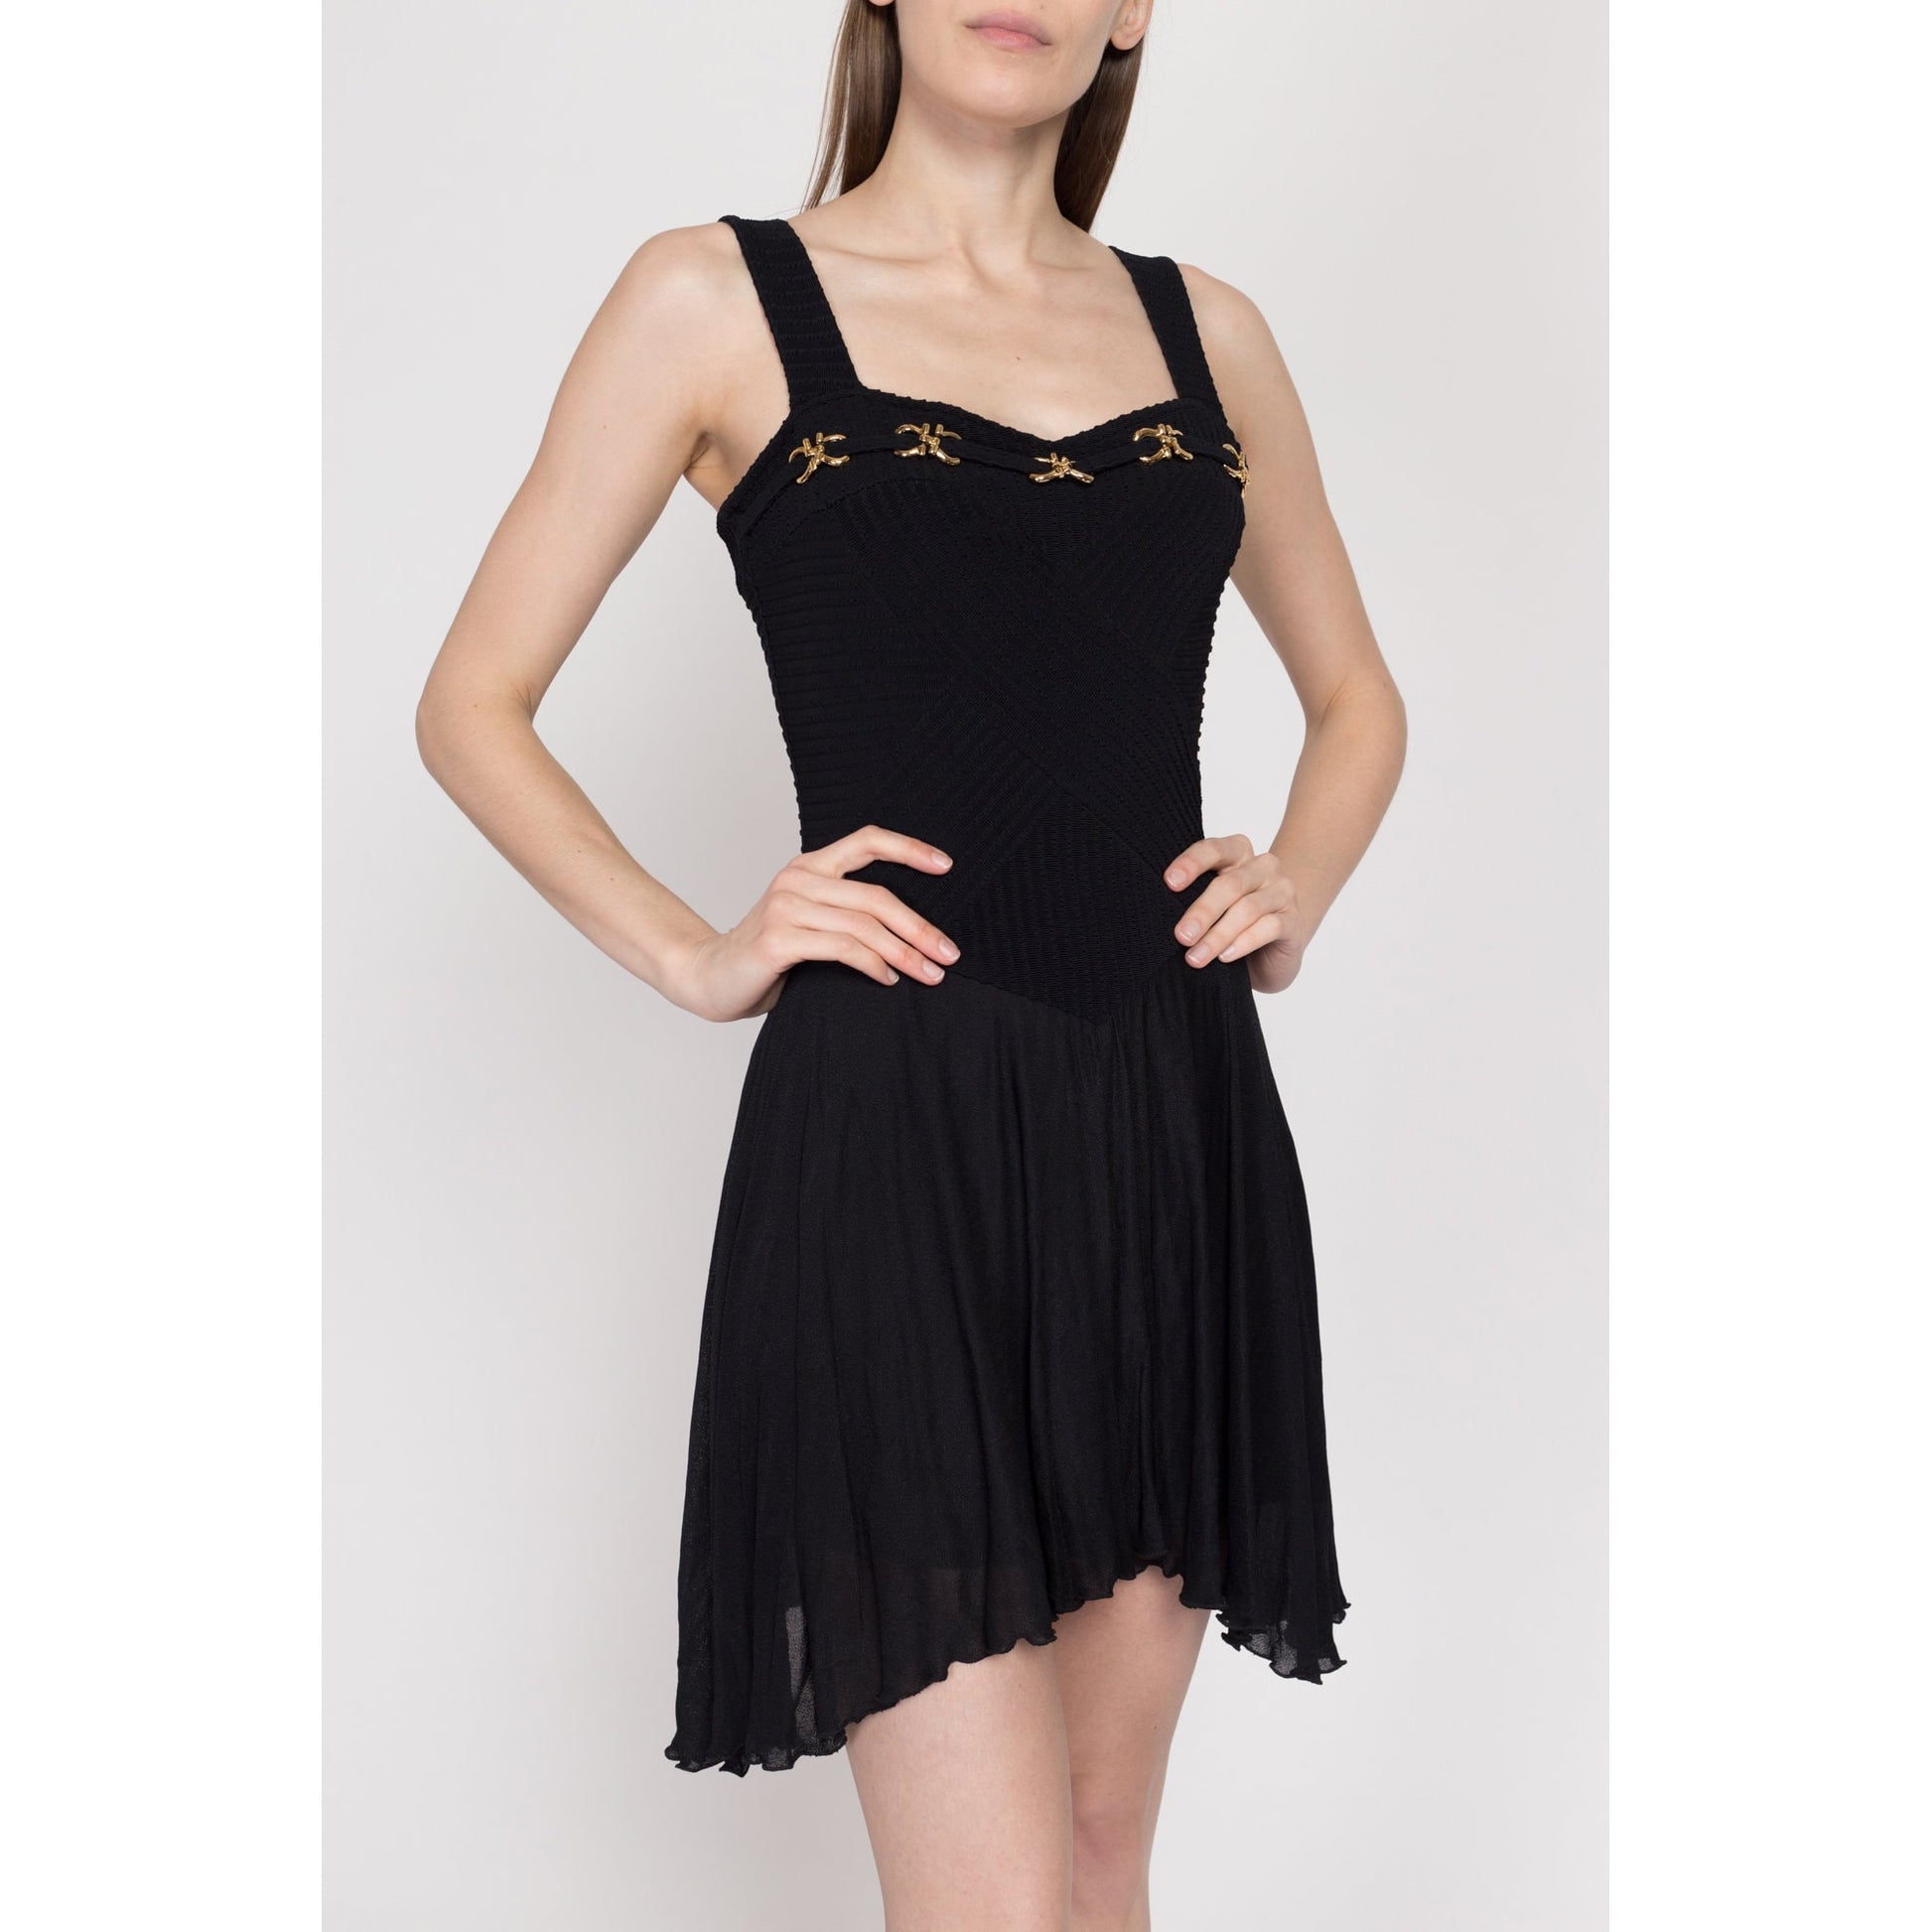 Small 90s Black Gold Chain Mini Party Dress | Vintage Pati-Pat Paris Fit & Flare High Low Hem Dress